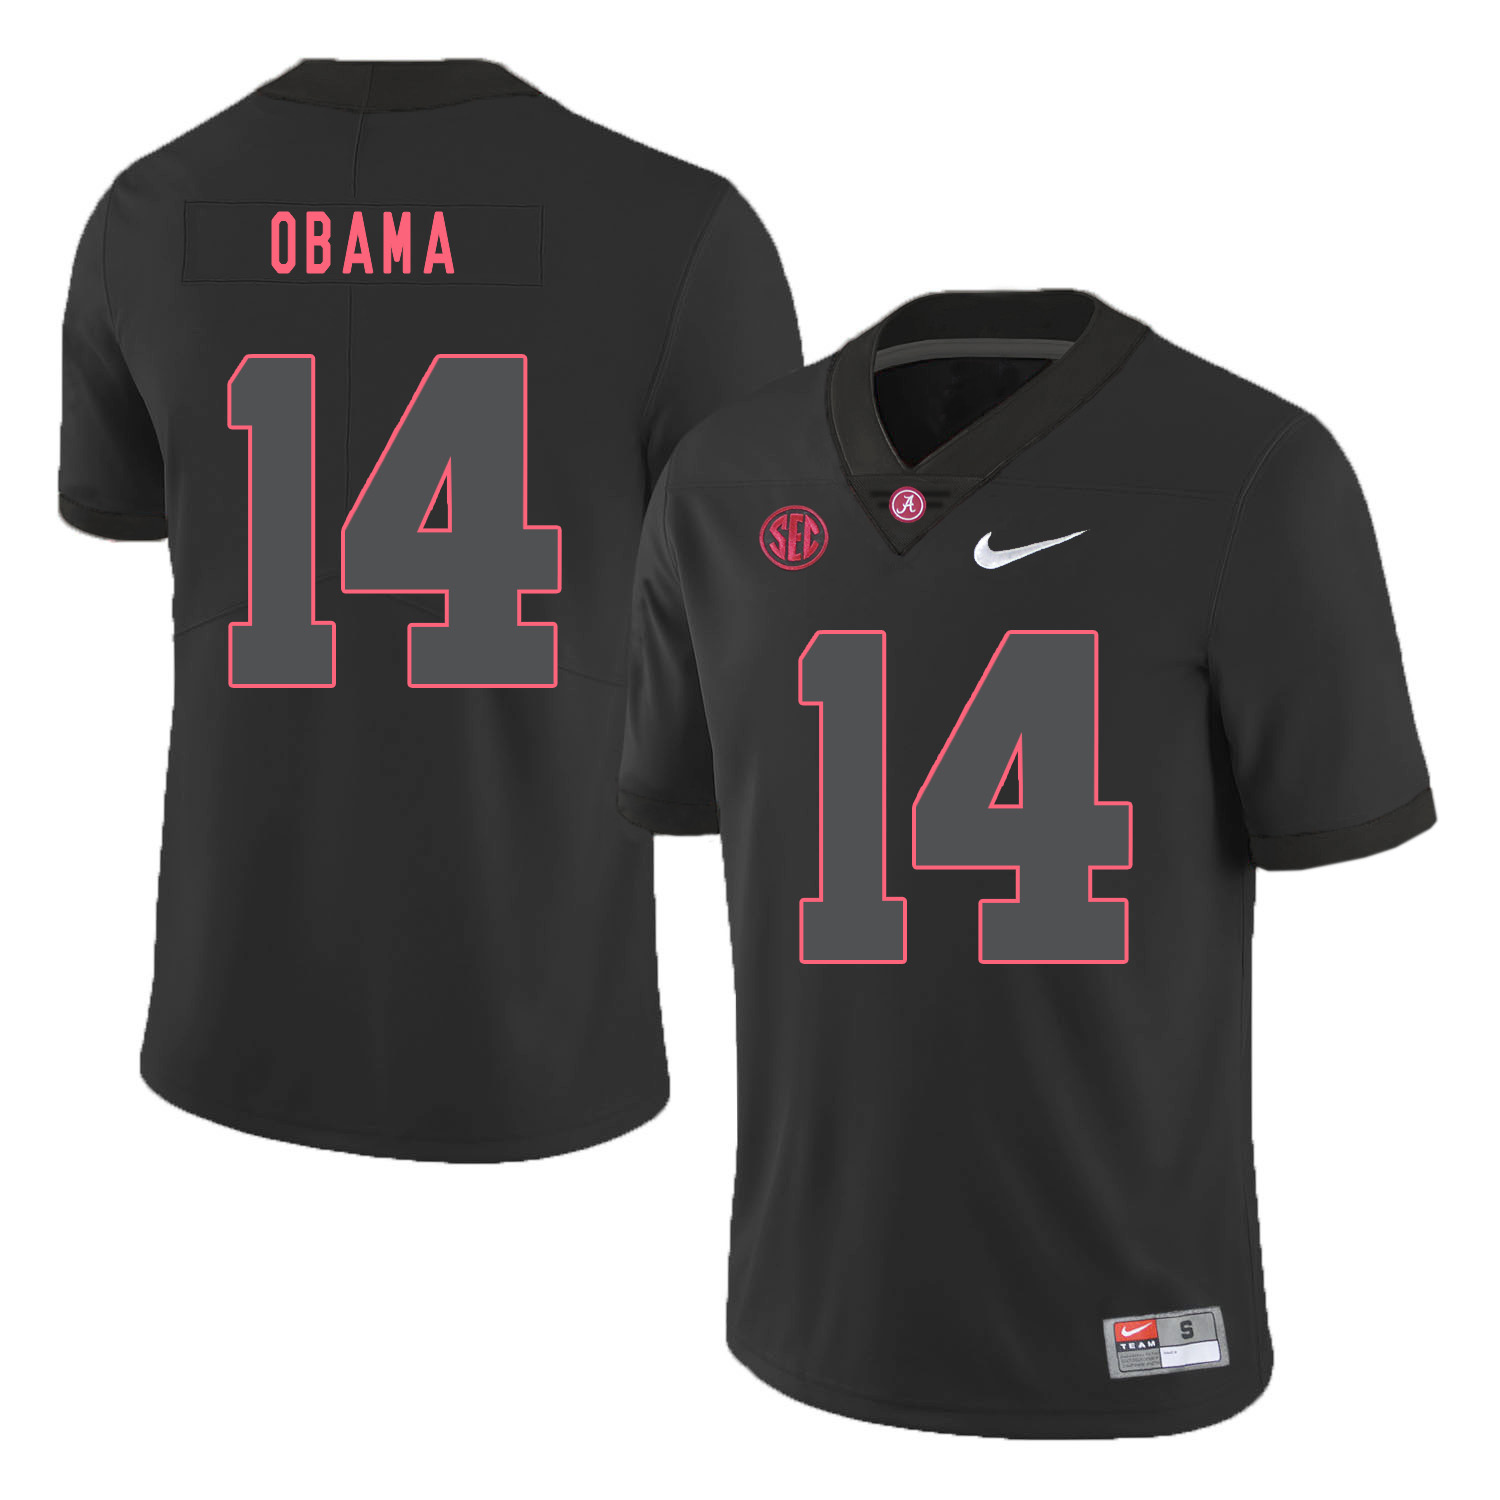 Alabama Crimson Tide 14 Barack Obama Black Shadow Nike College Football Jersey